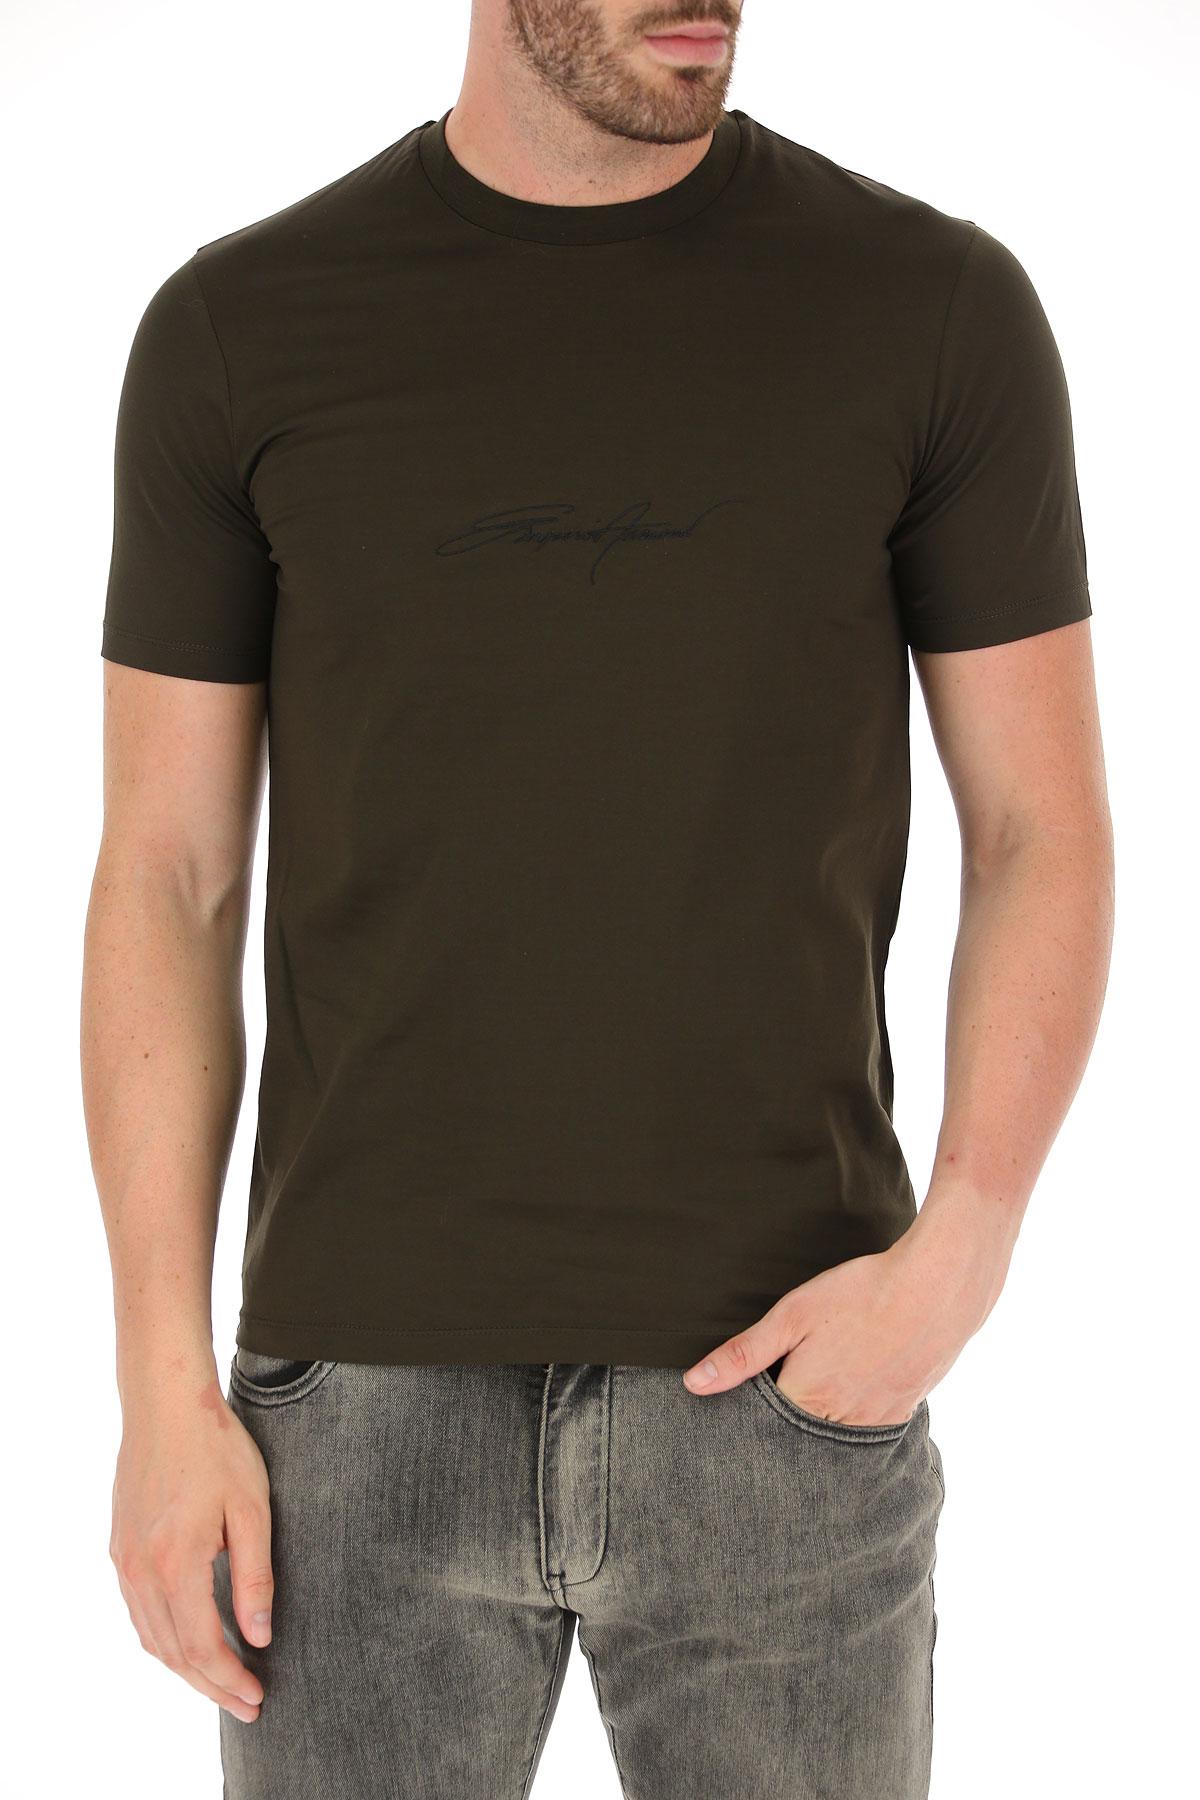 Emporio Armani Cotton T-shirt For Men in Dark Green (Green) for Men - Lyst